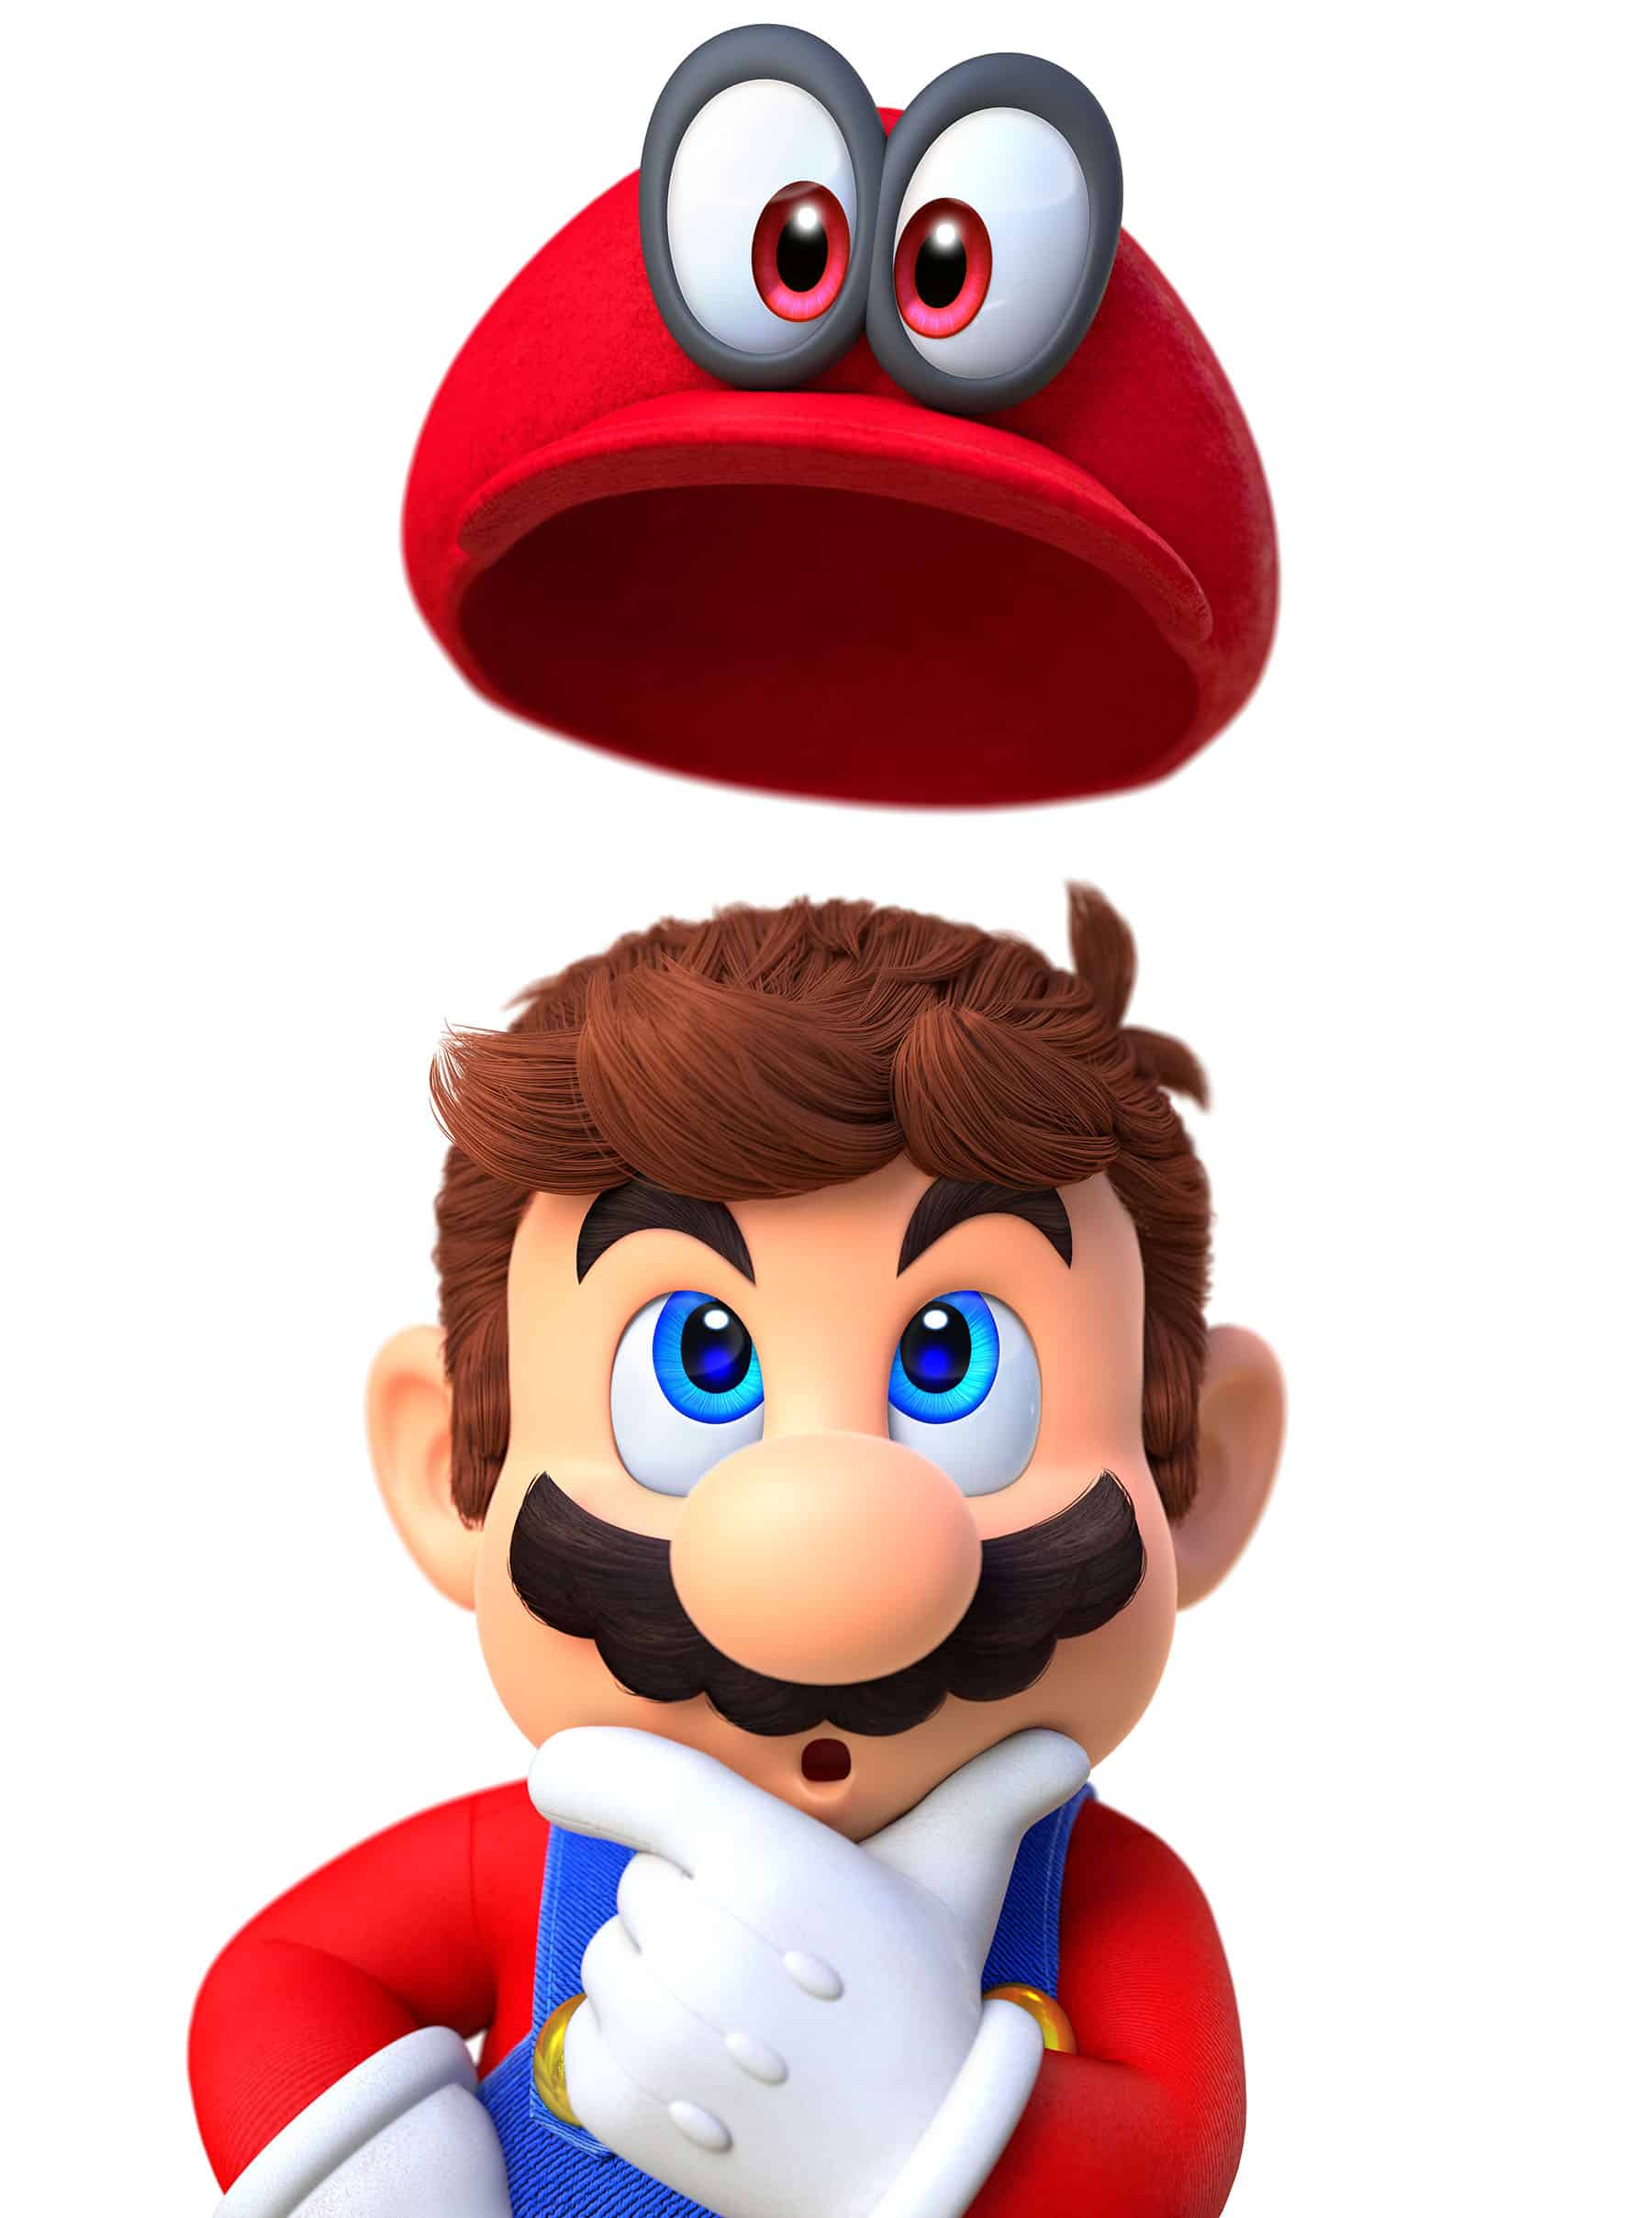 Super-Mario-Odyssey_2017_06-13-17_027.jpg